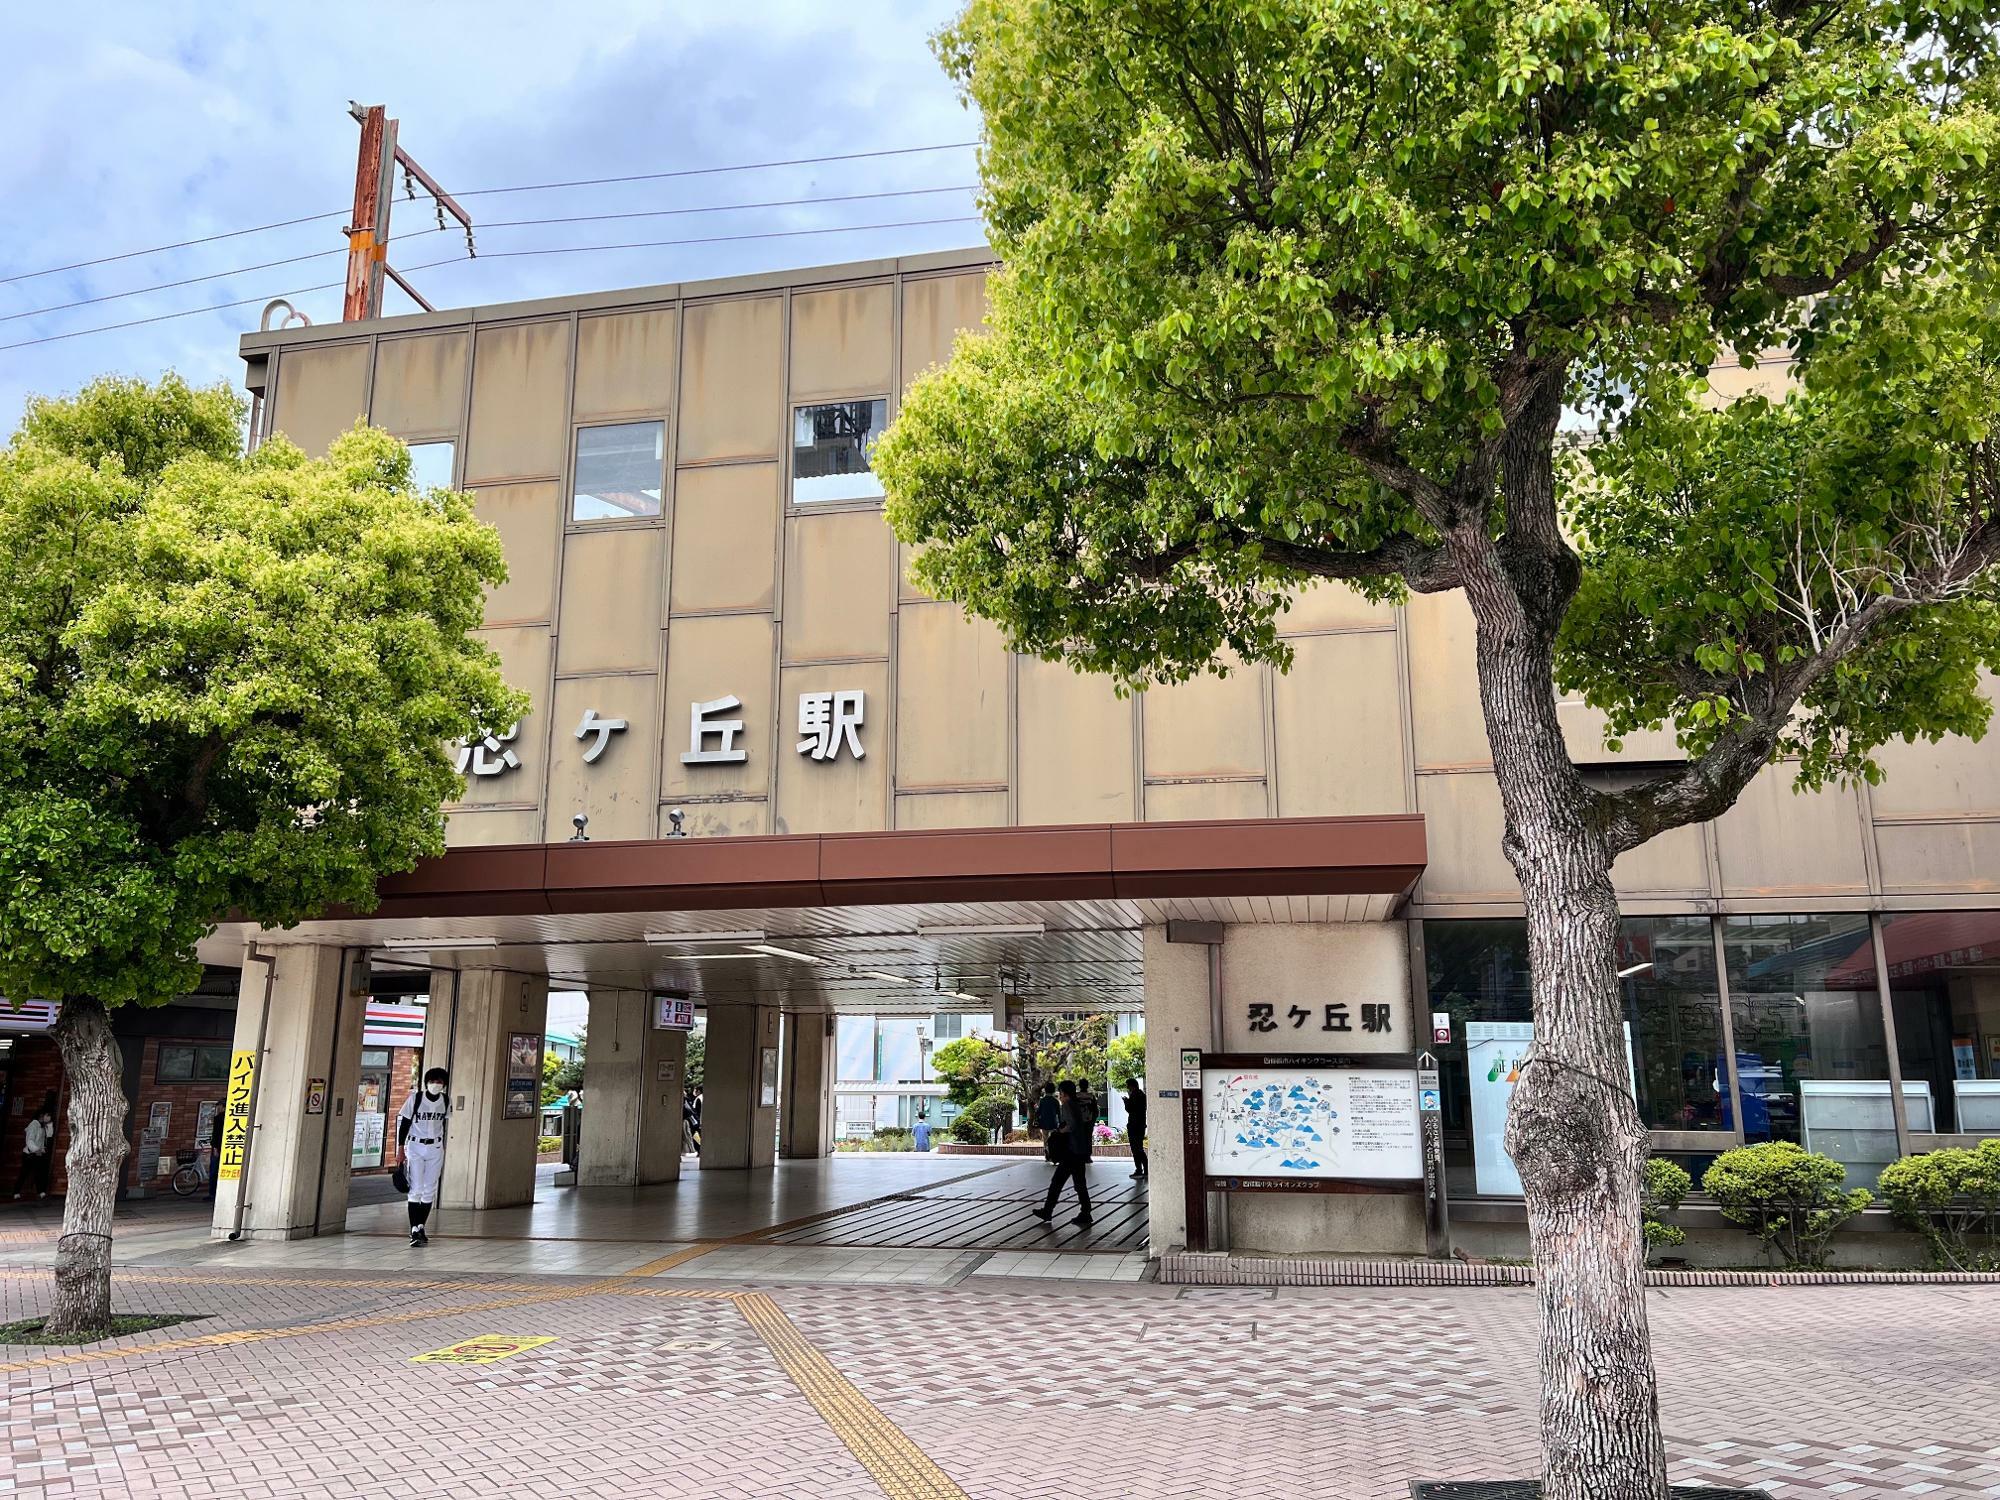 JR忍ケ丘駅の東側から撮影